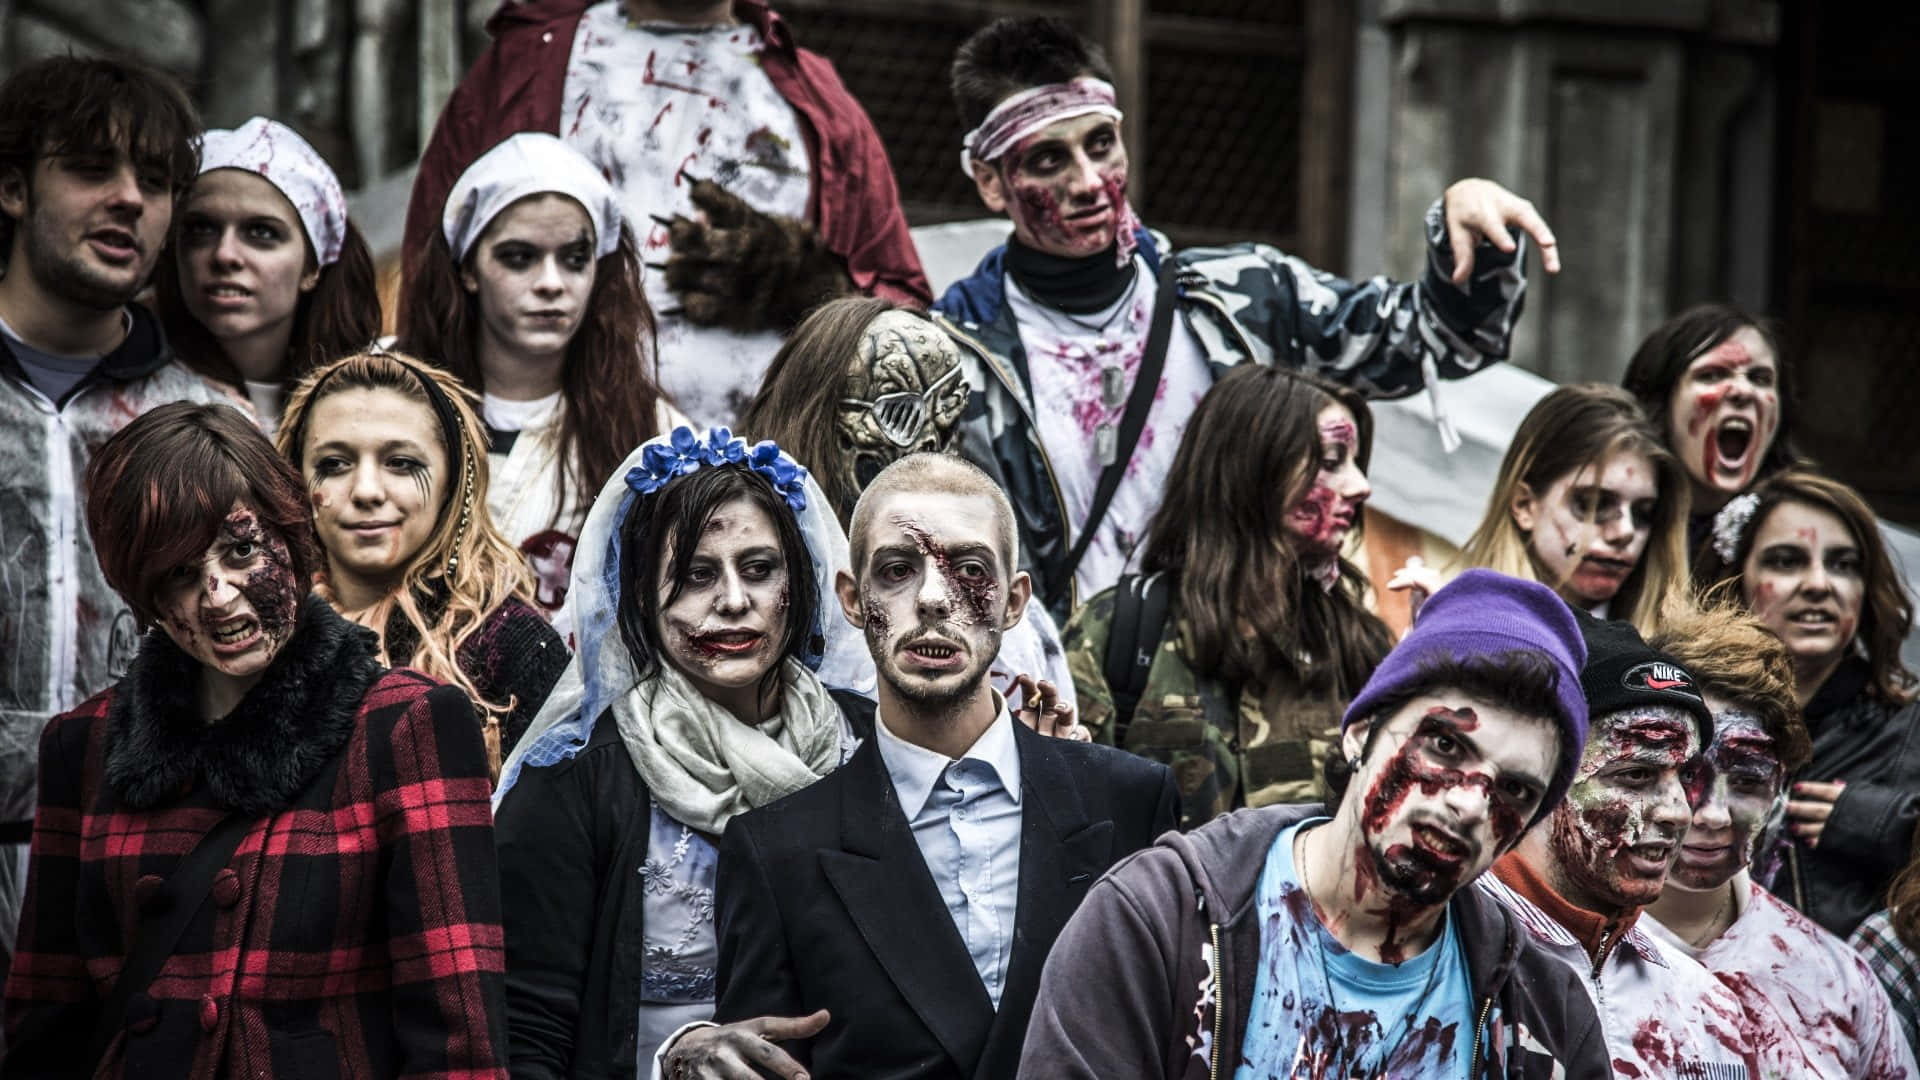 Prepare for Halloween with a unique zombie costume! Wallpaper